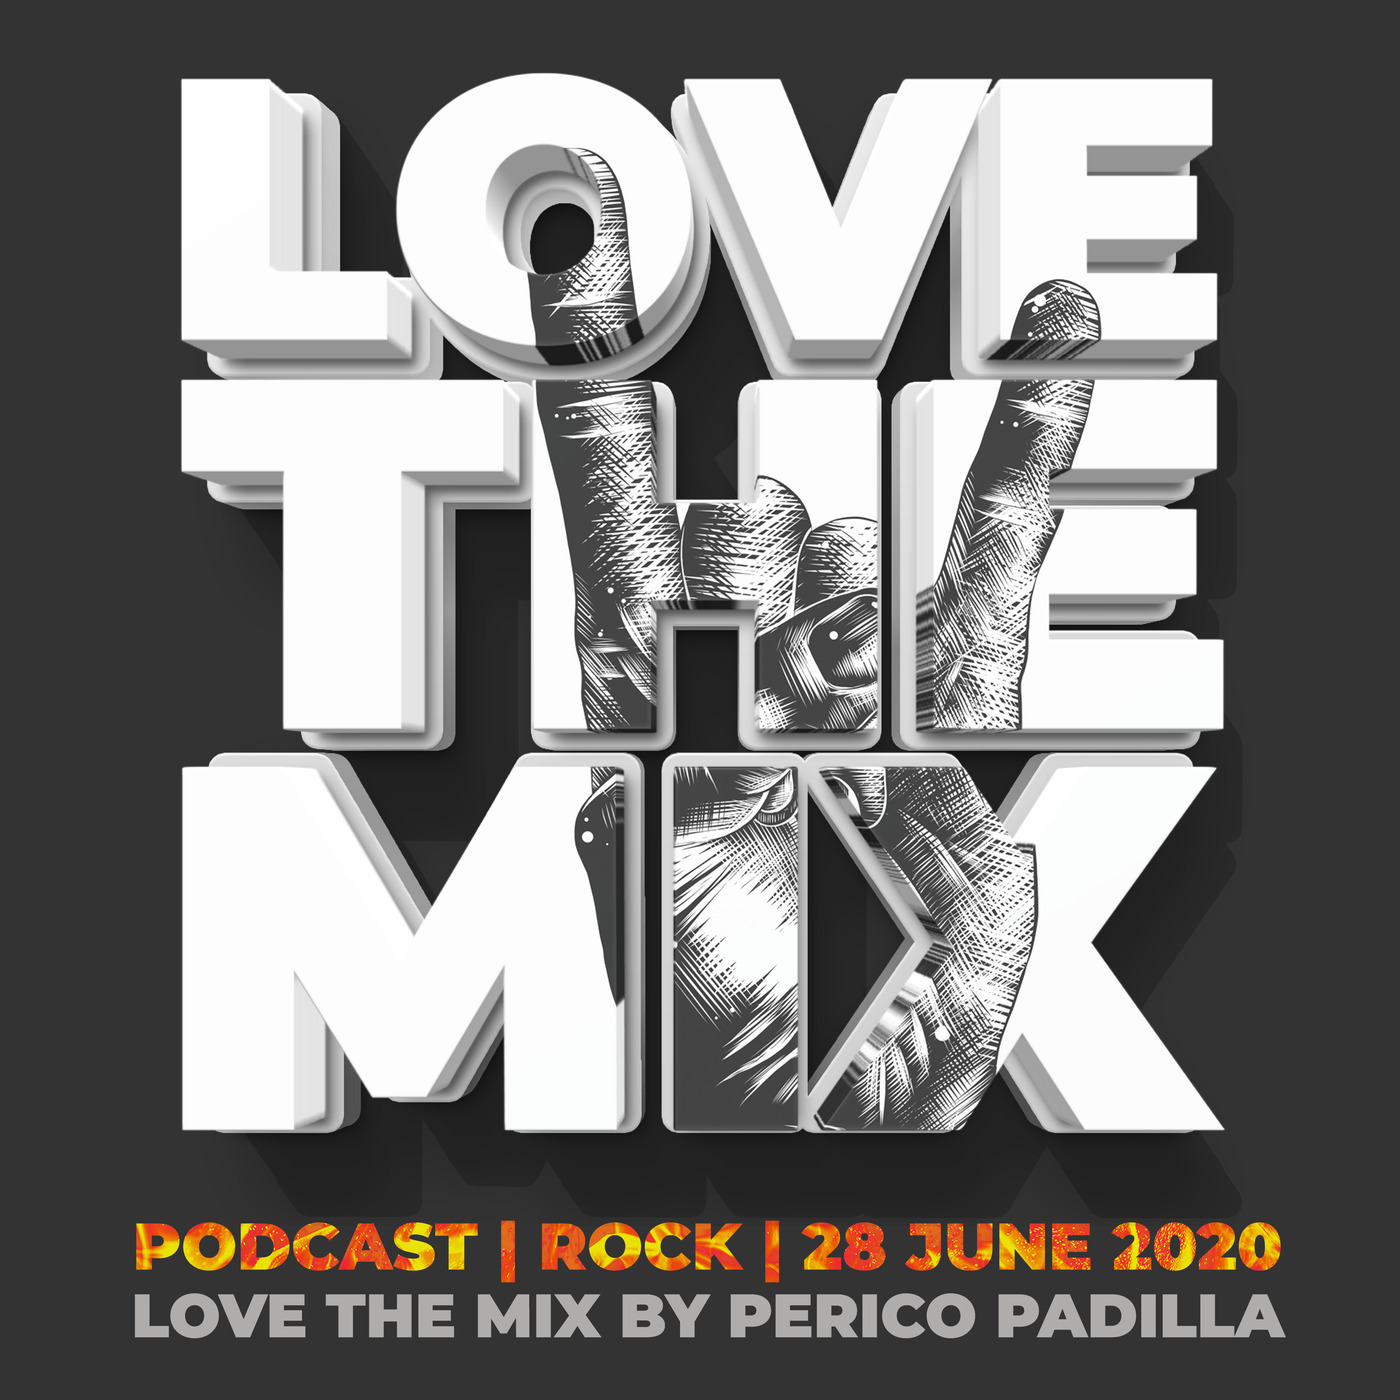 LOVE THE MIX PODCAST | ROCK 80'S | 28 JUN 2020 By Perico Padilla